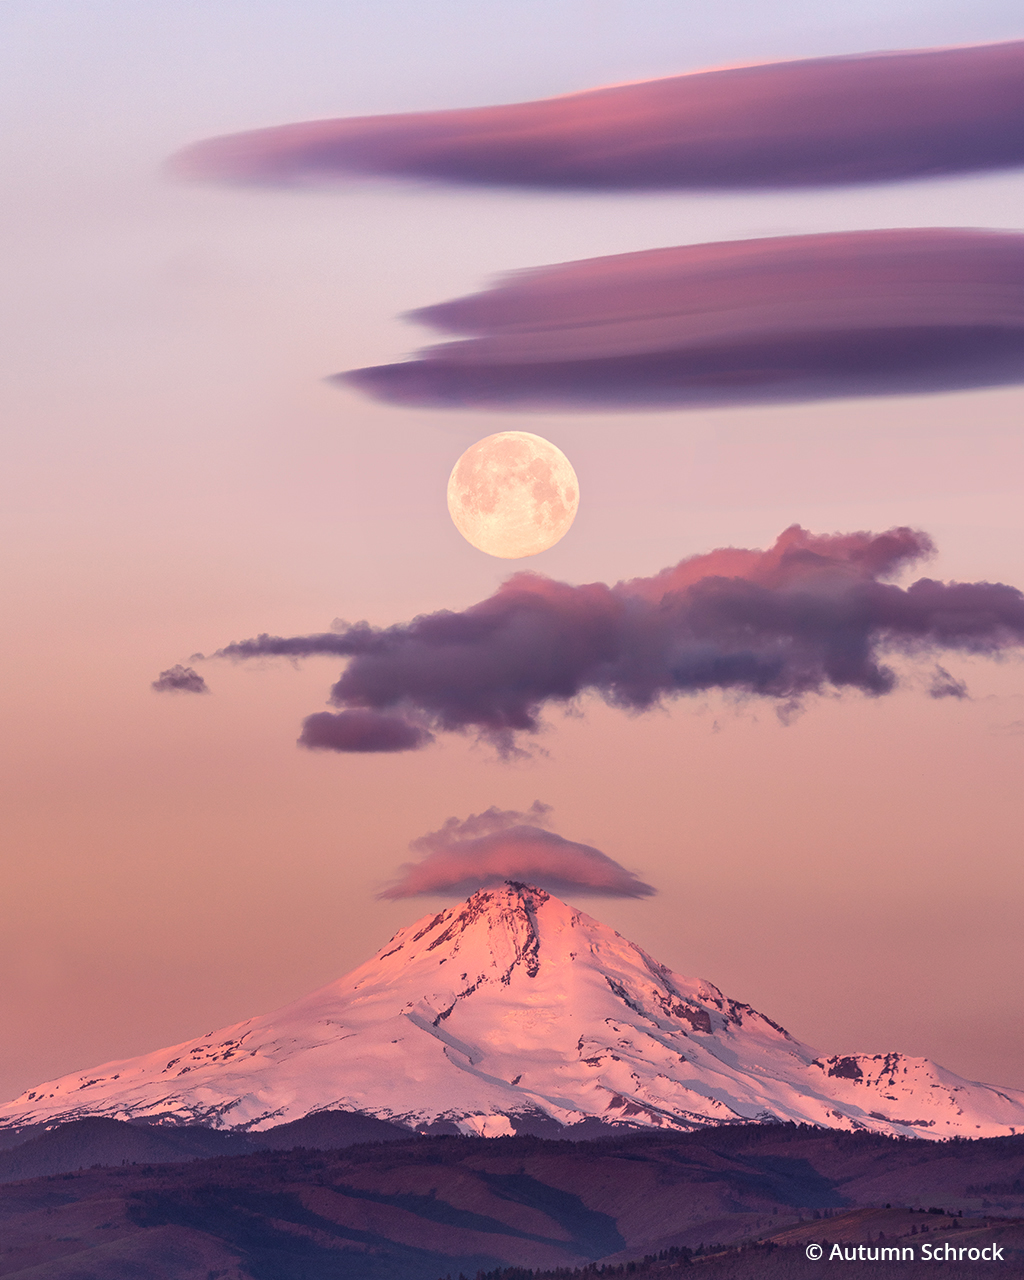 Photograph of the moon over Mt. Hood, Oregon.